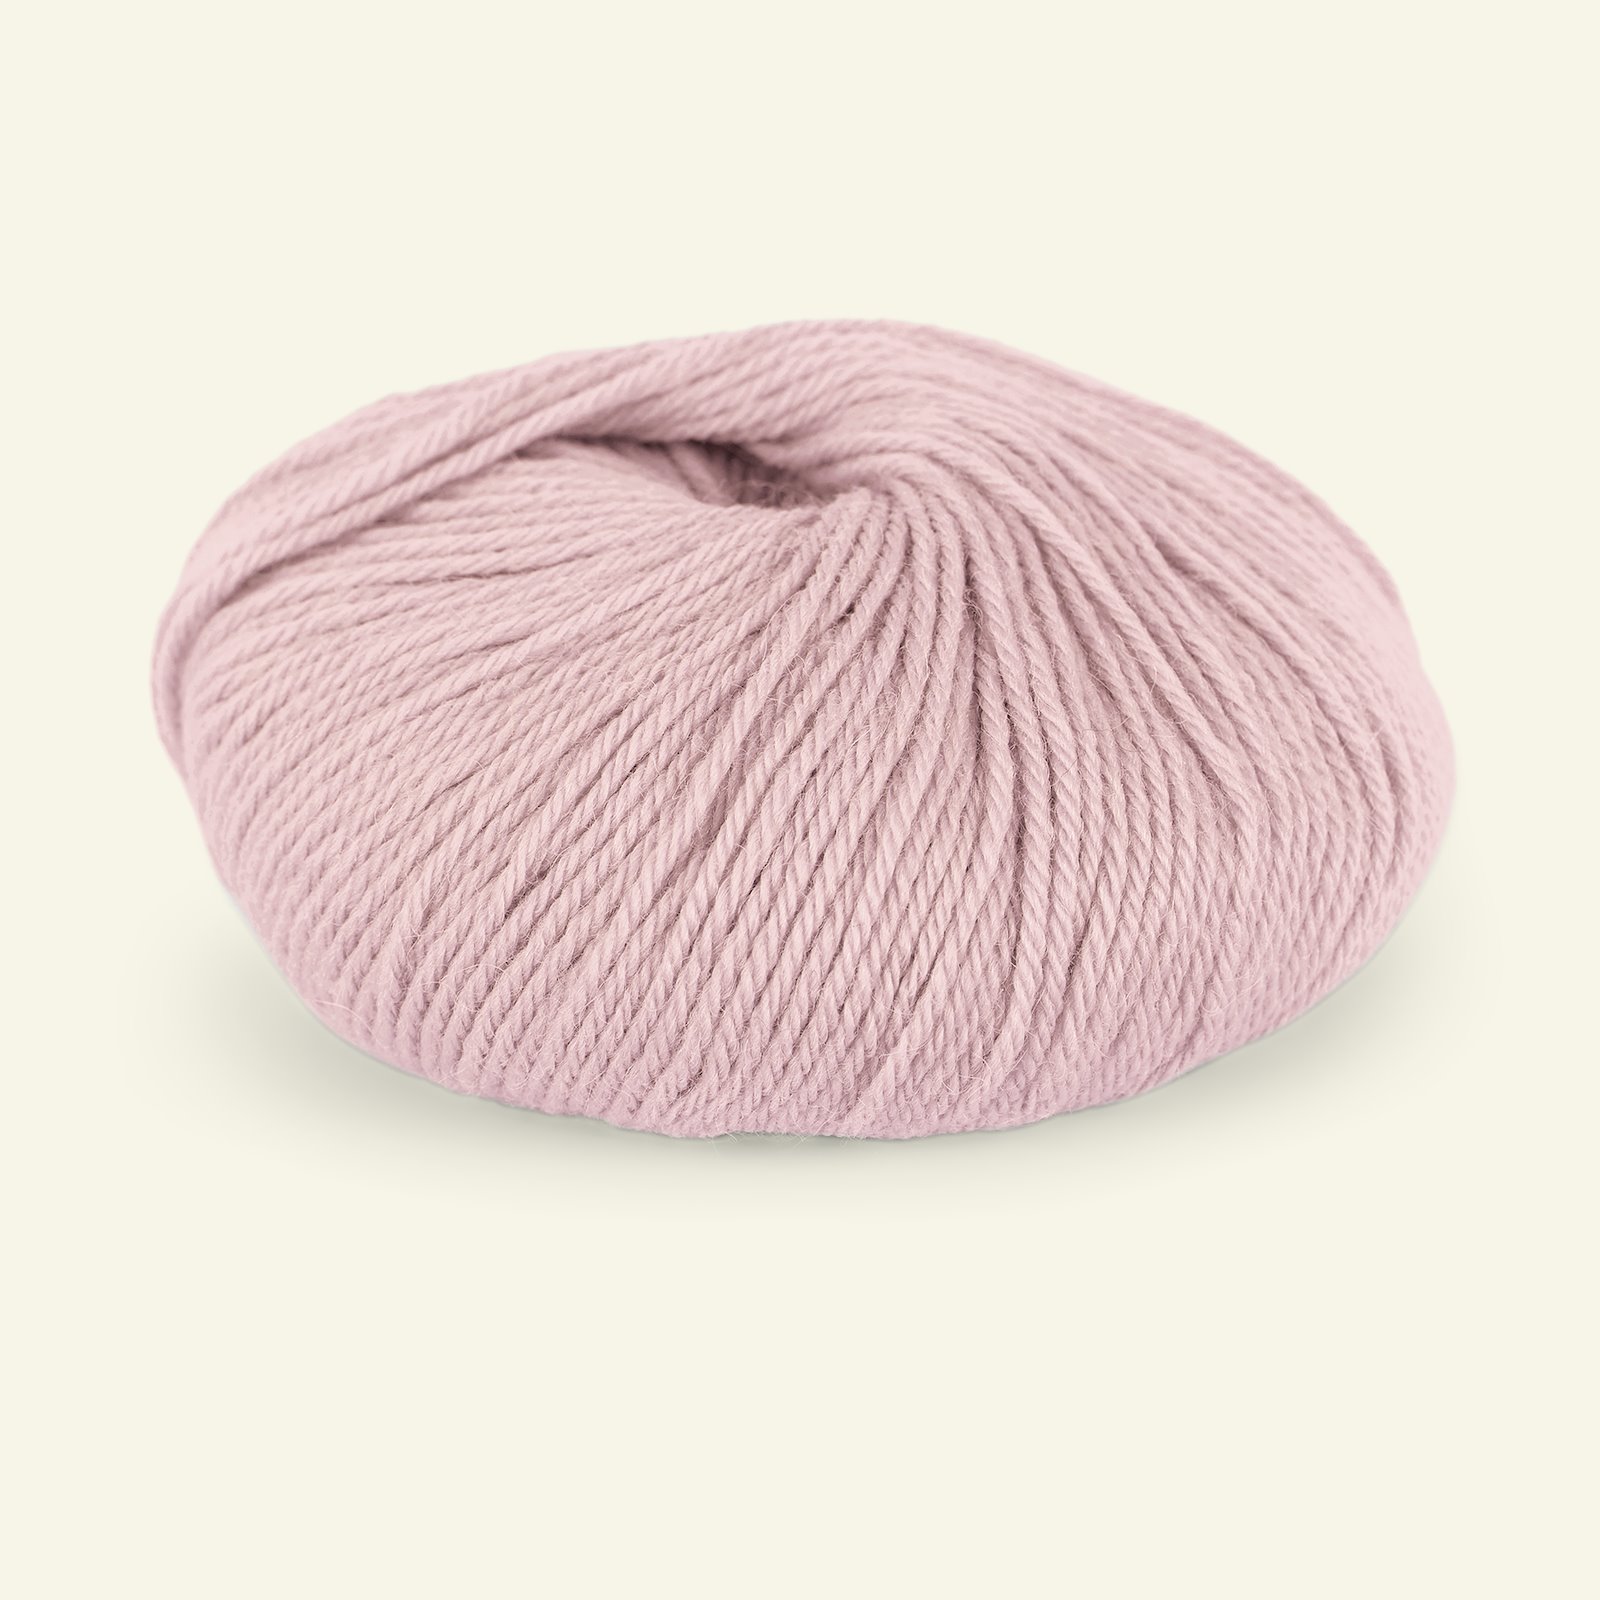 Du Store Alpakka, alpaca merino mixed yarn "Sterk", dusty rose (850) 90000676_pack_b